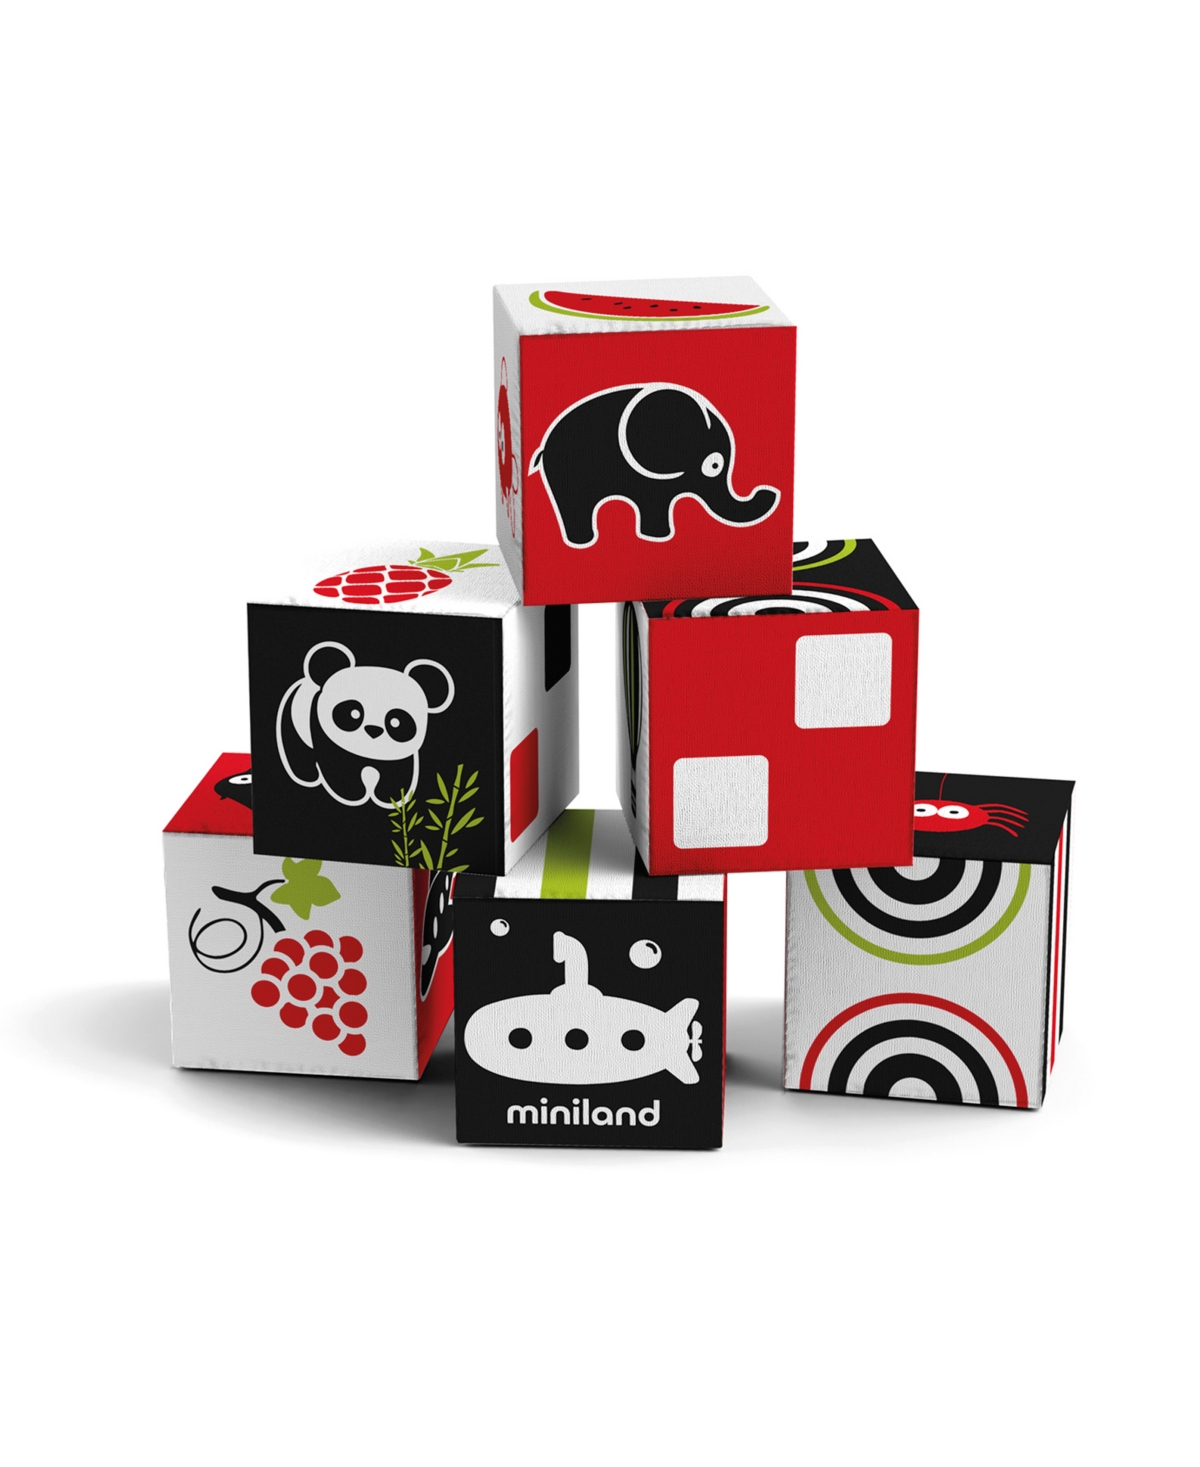 Miniland Kids' First Senses Cubes Set, 6 Pieces In No Color